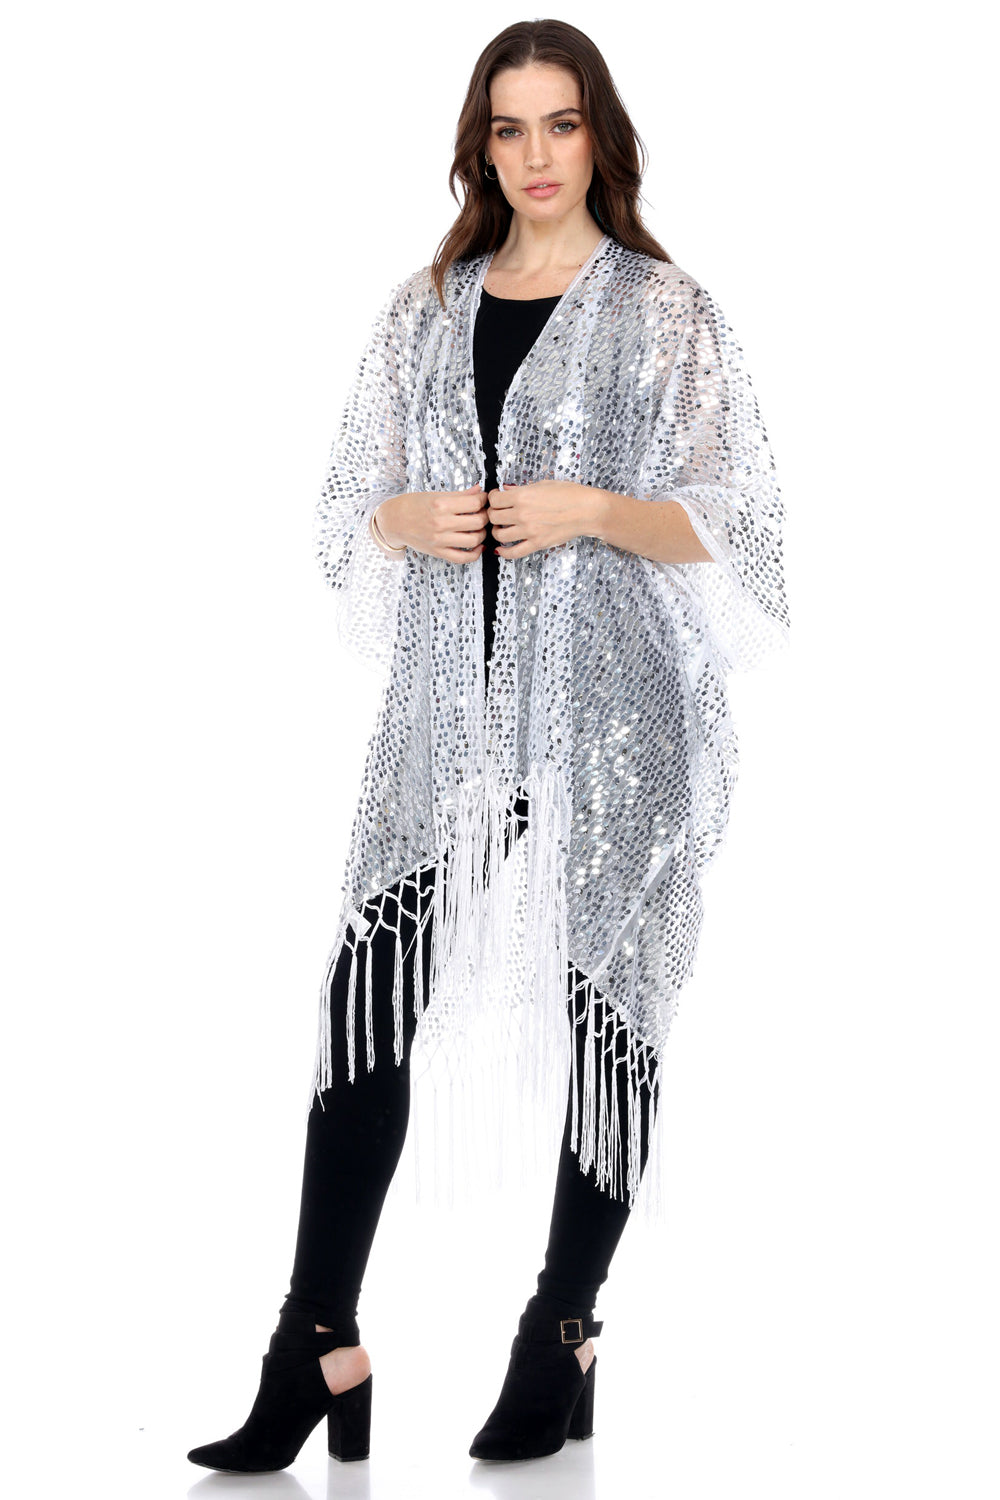 Jostar Women's Sequin Fringe Tassel Kimono, CPE005-TN - Jostar Online